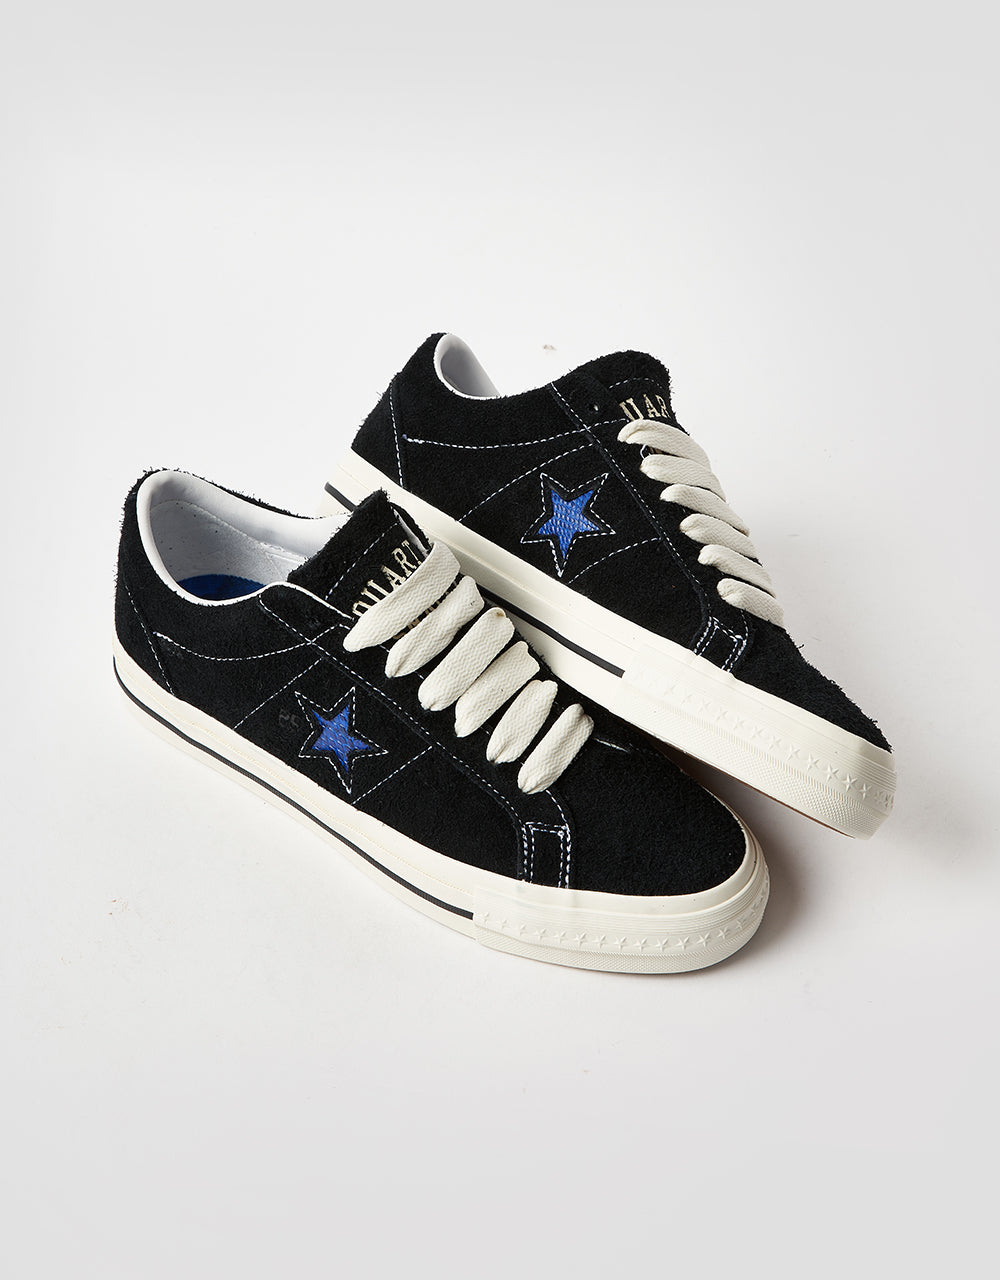 Converse x Quartersnacks One Star Ox Skate Shoes - Black/White